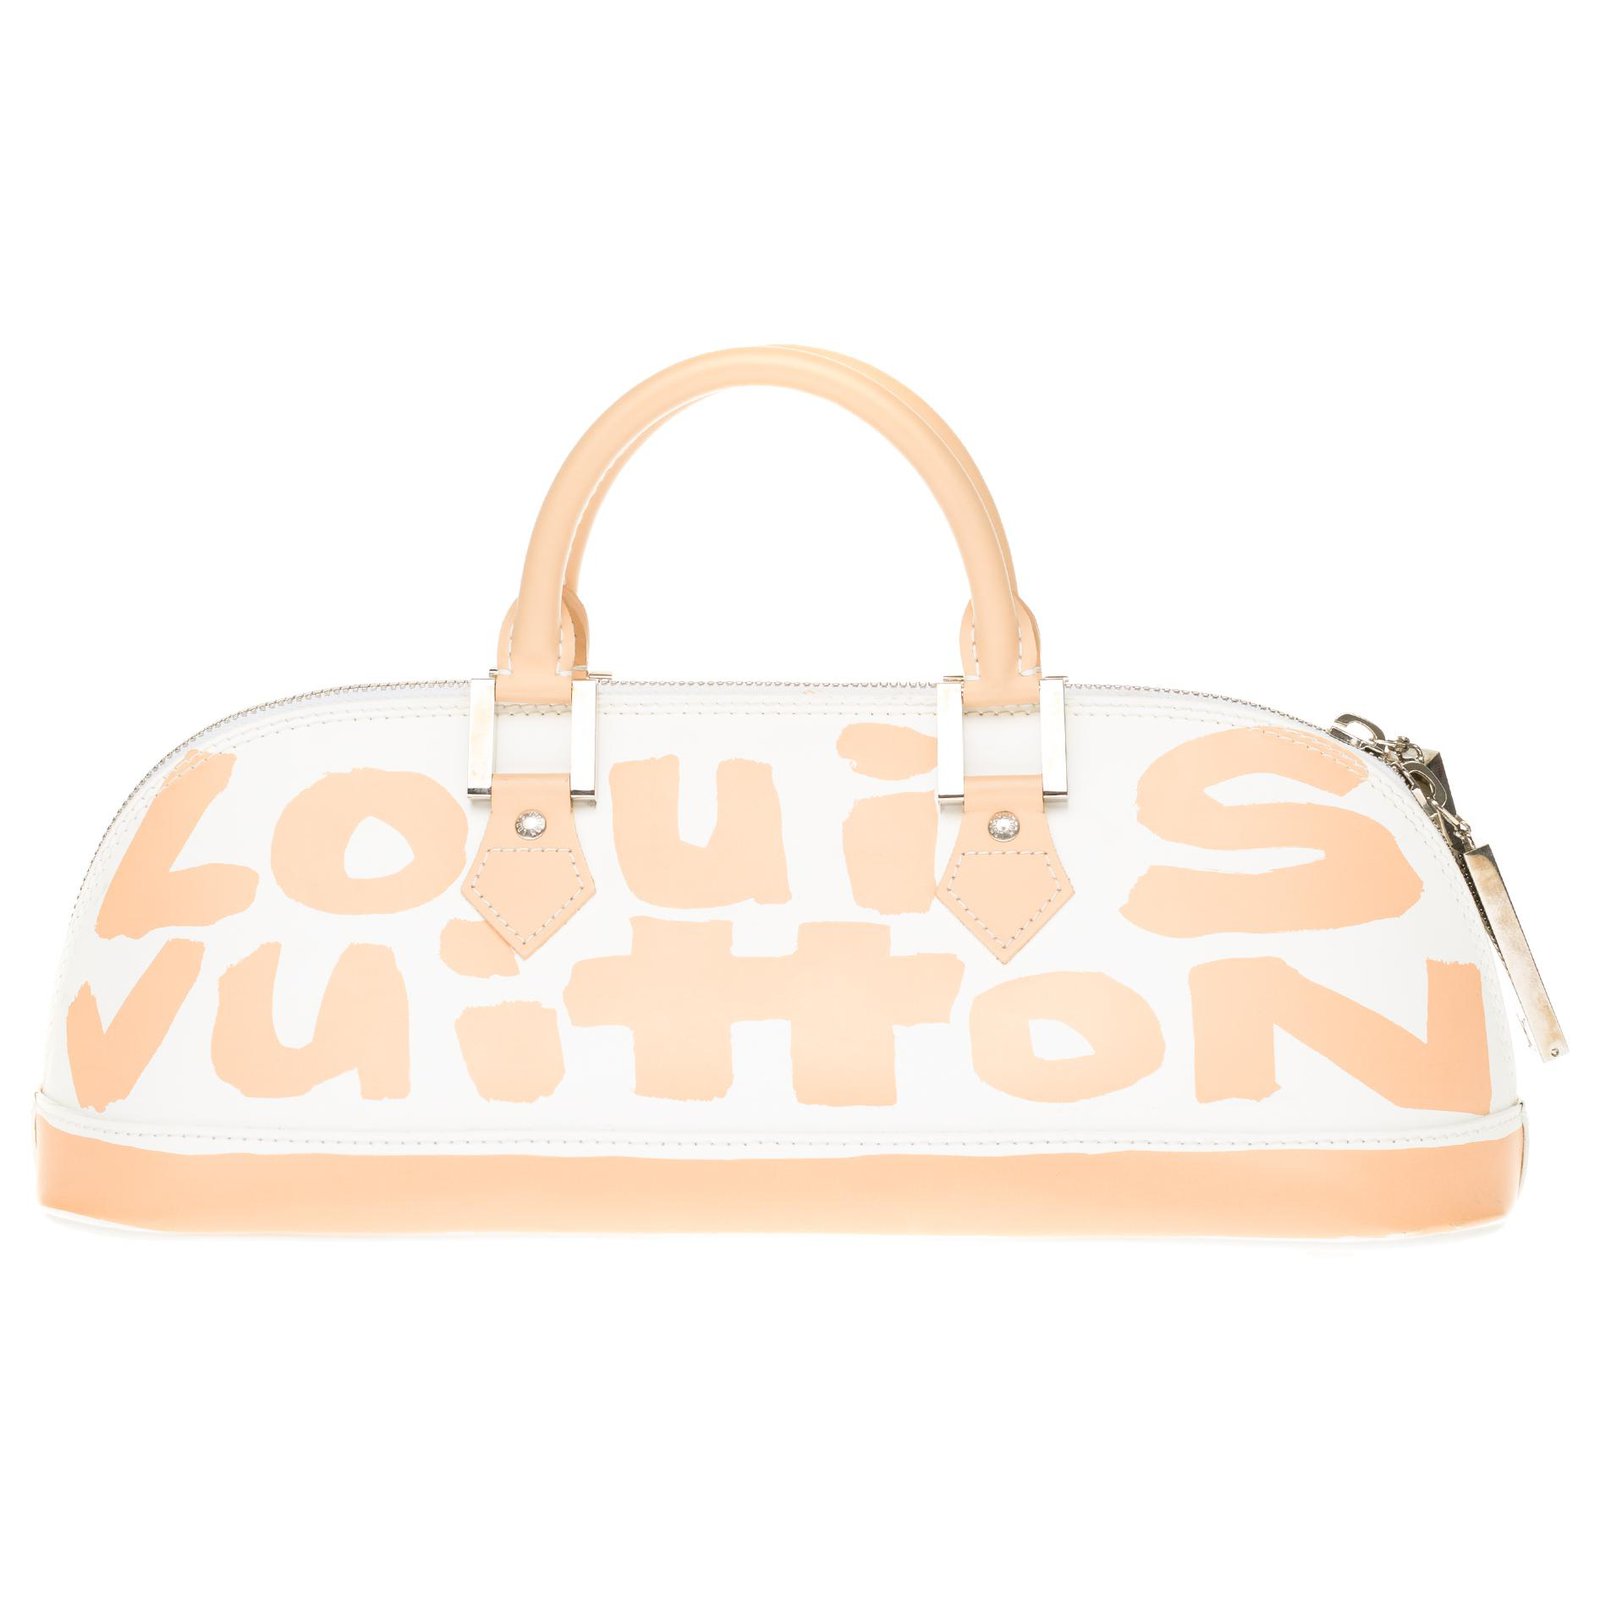 LIMITED COLLECTOR SERIES Louis Vuitton Alma GM Graffiti handbag